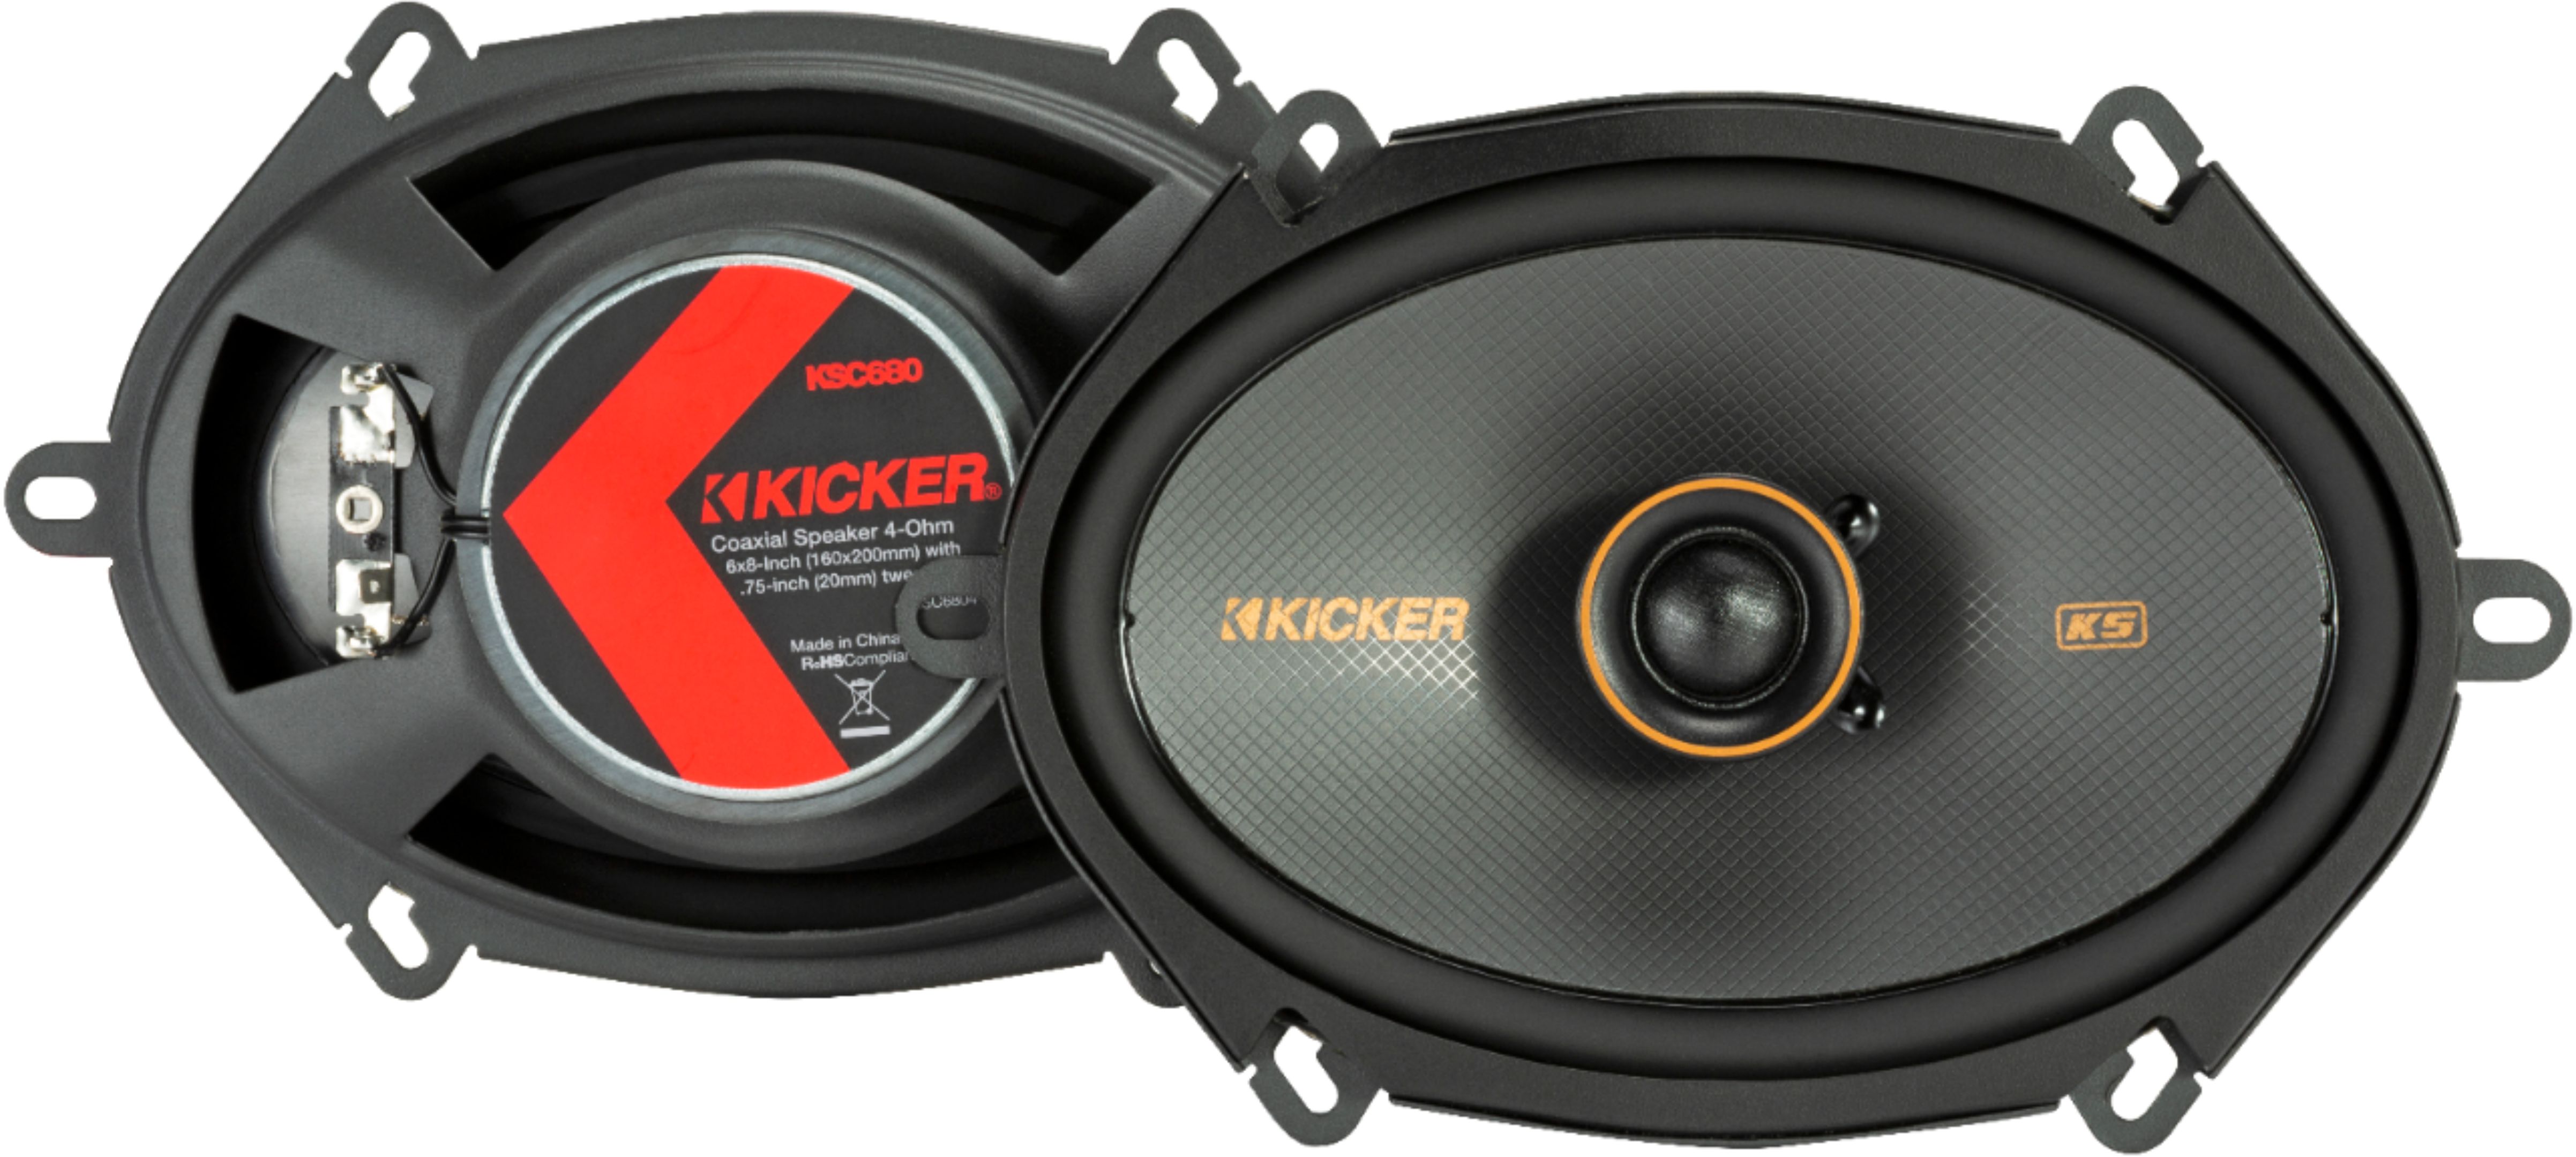 KICKER 300W 6" x 8" KS Series 2-Way Coaxial Car Stereo Speakers44KSC6804